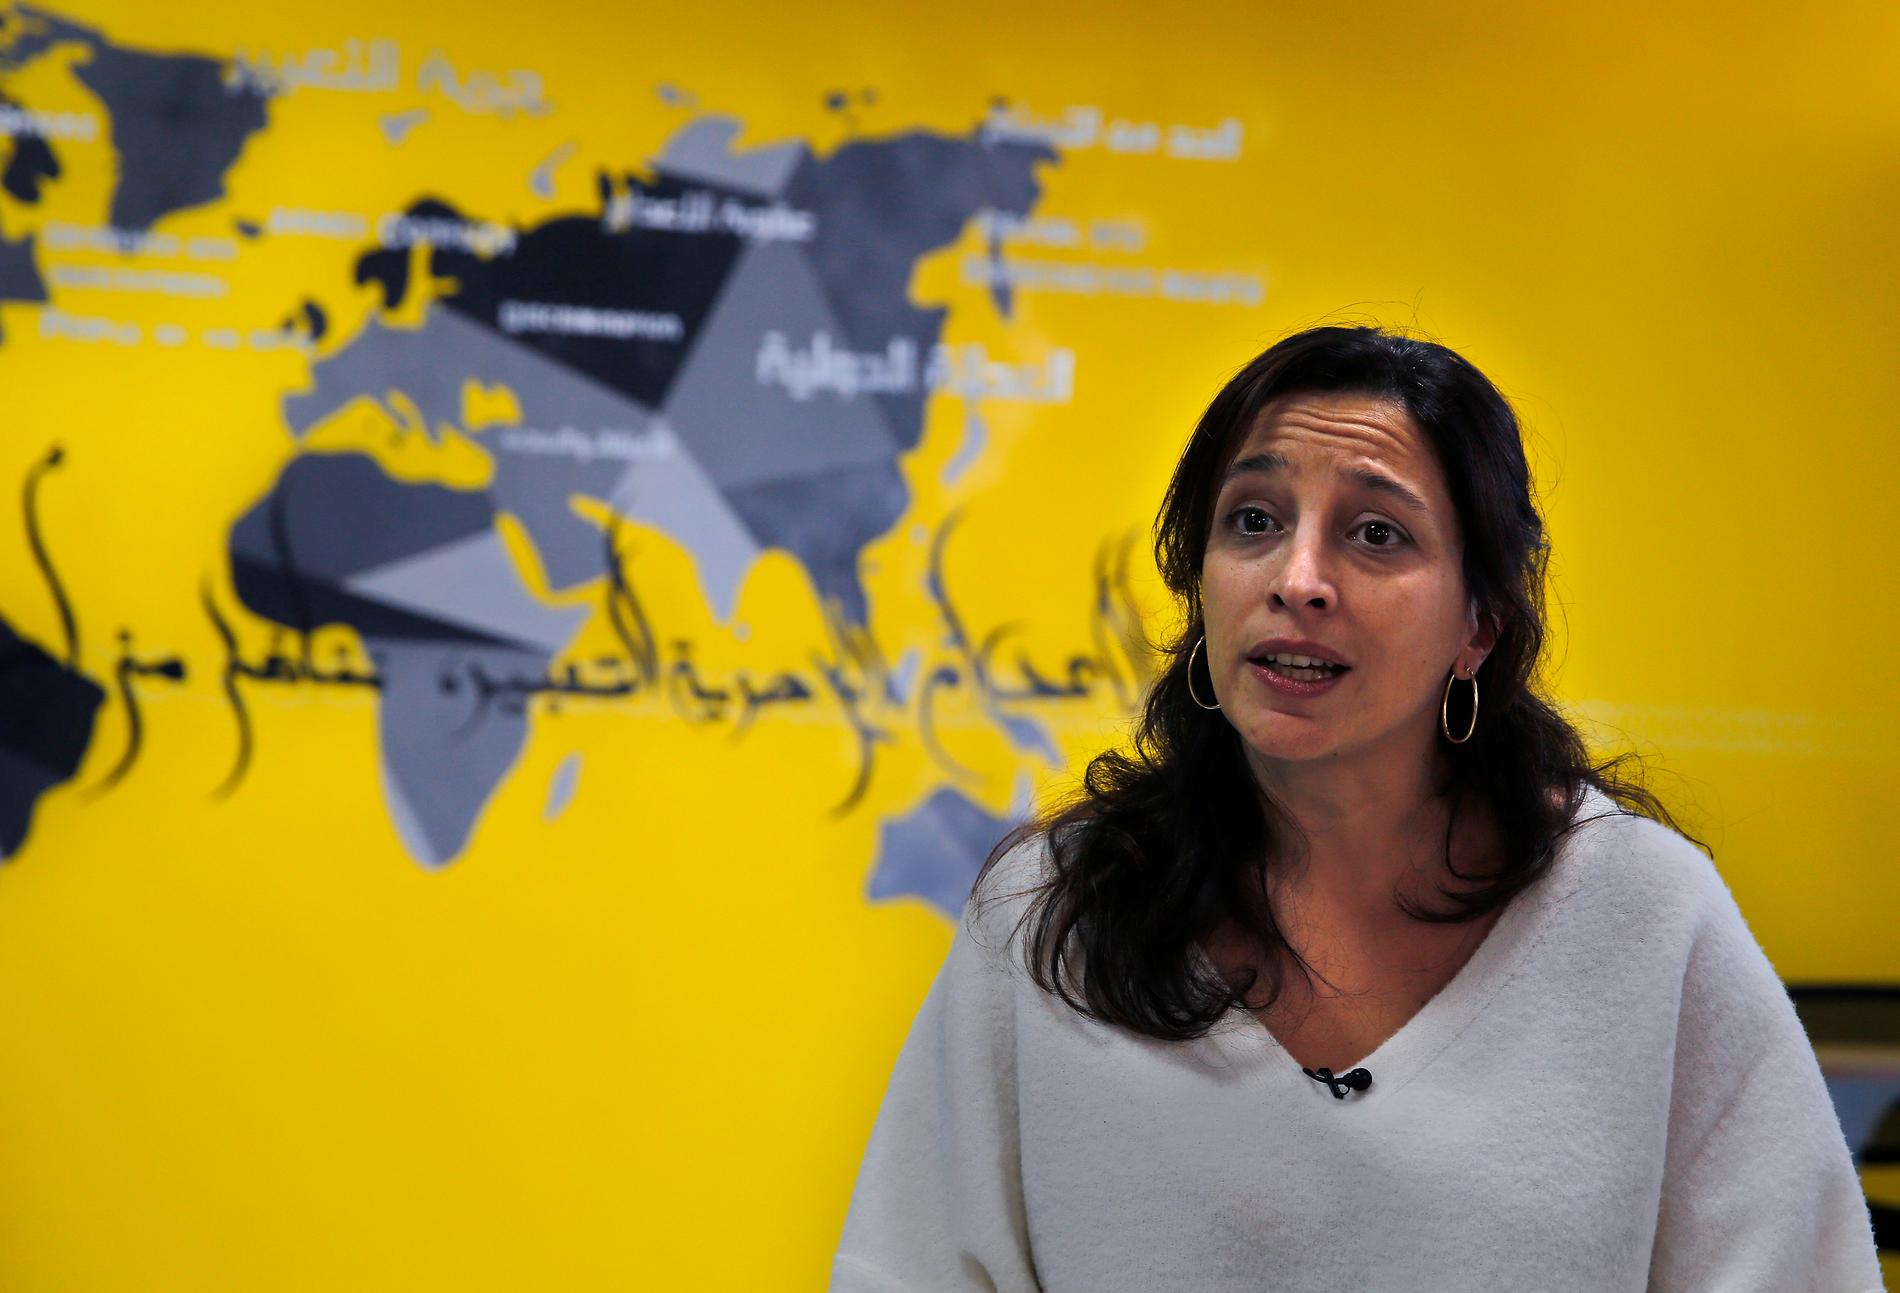  Lynn Maalouf, researchchef för Amnestys i Mellanöstern.